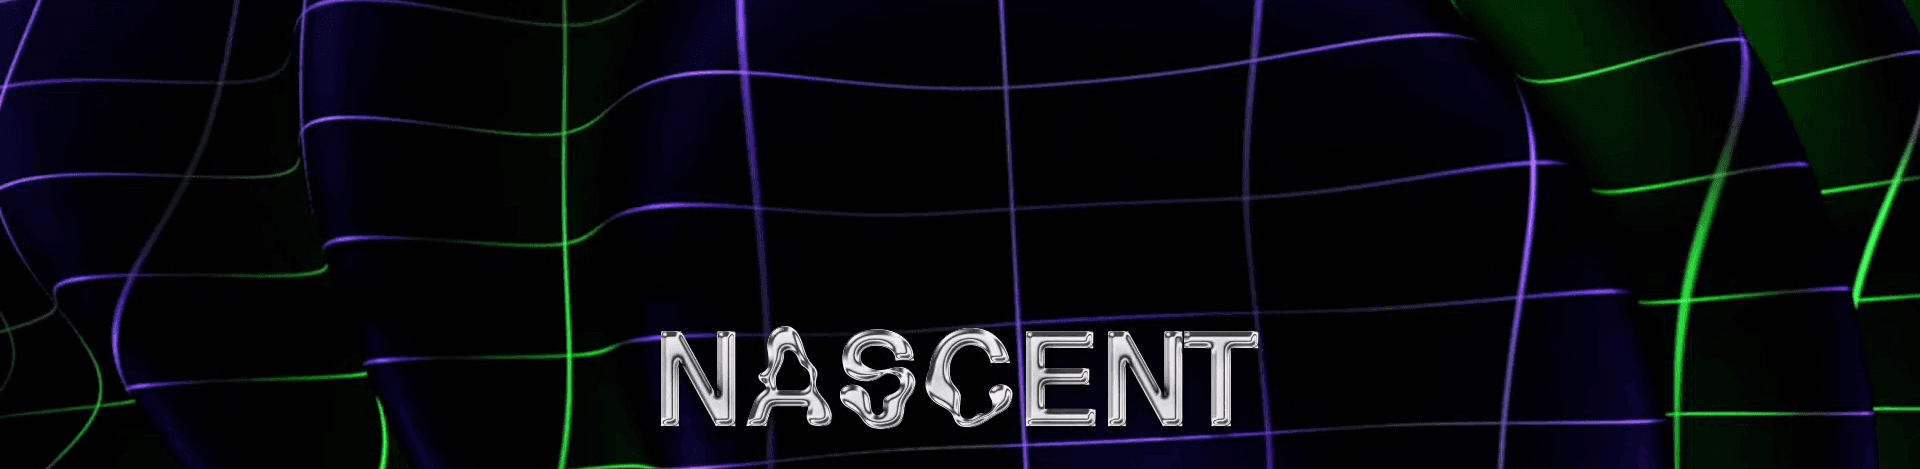 Nascent-Energy Banner